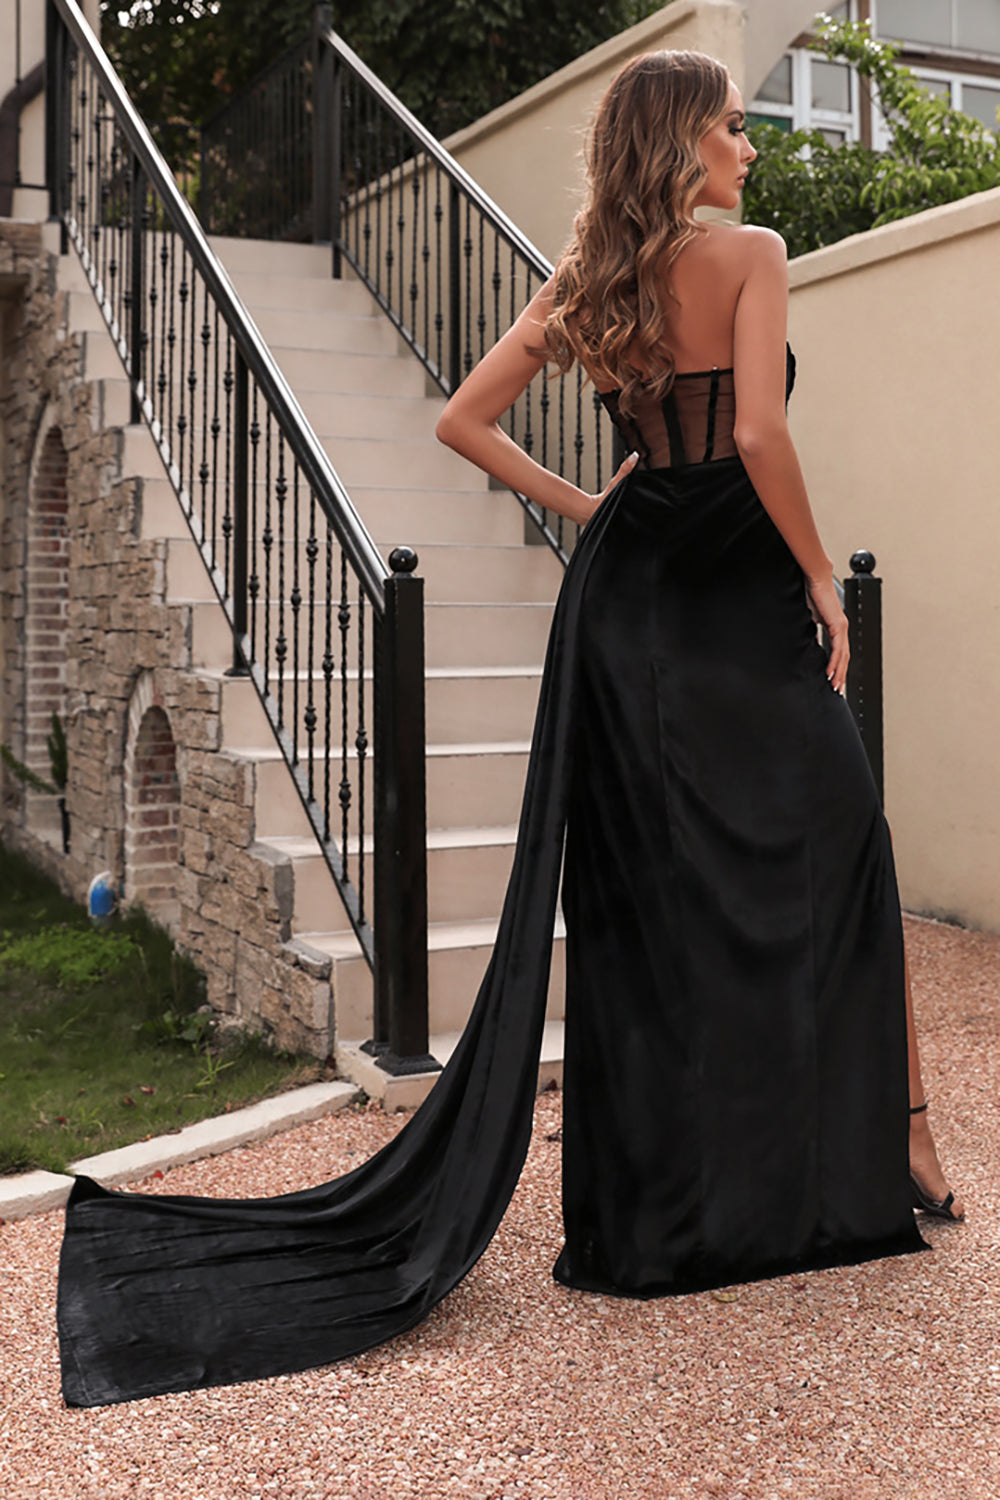 ZAPAKA Women Corset Prom Dress with Slit Black Strapless Party Dress